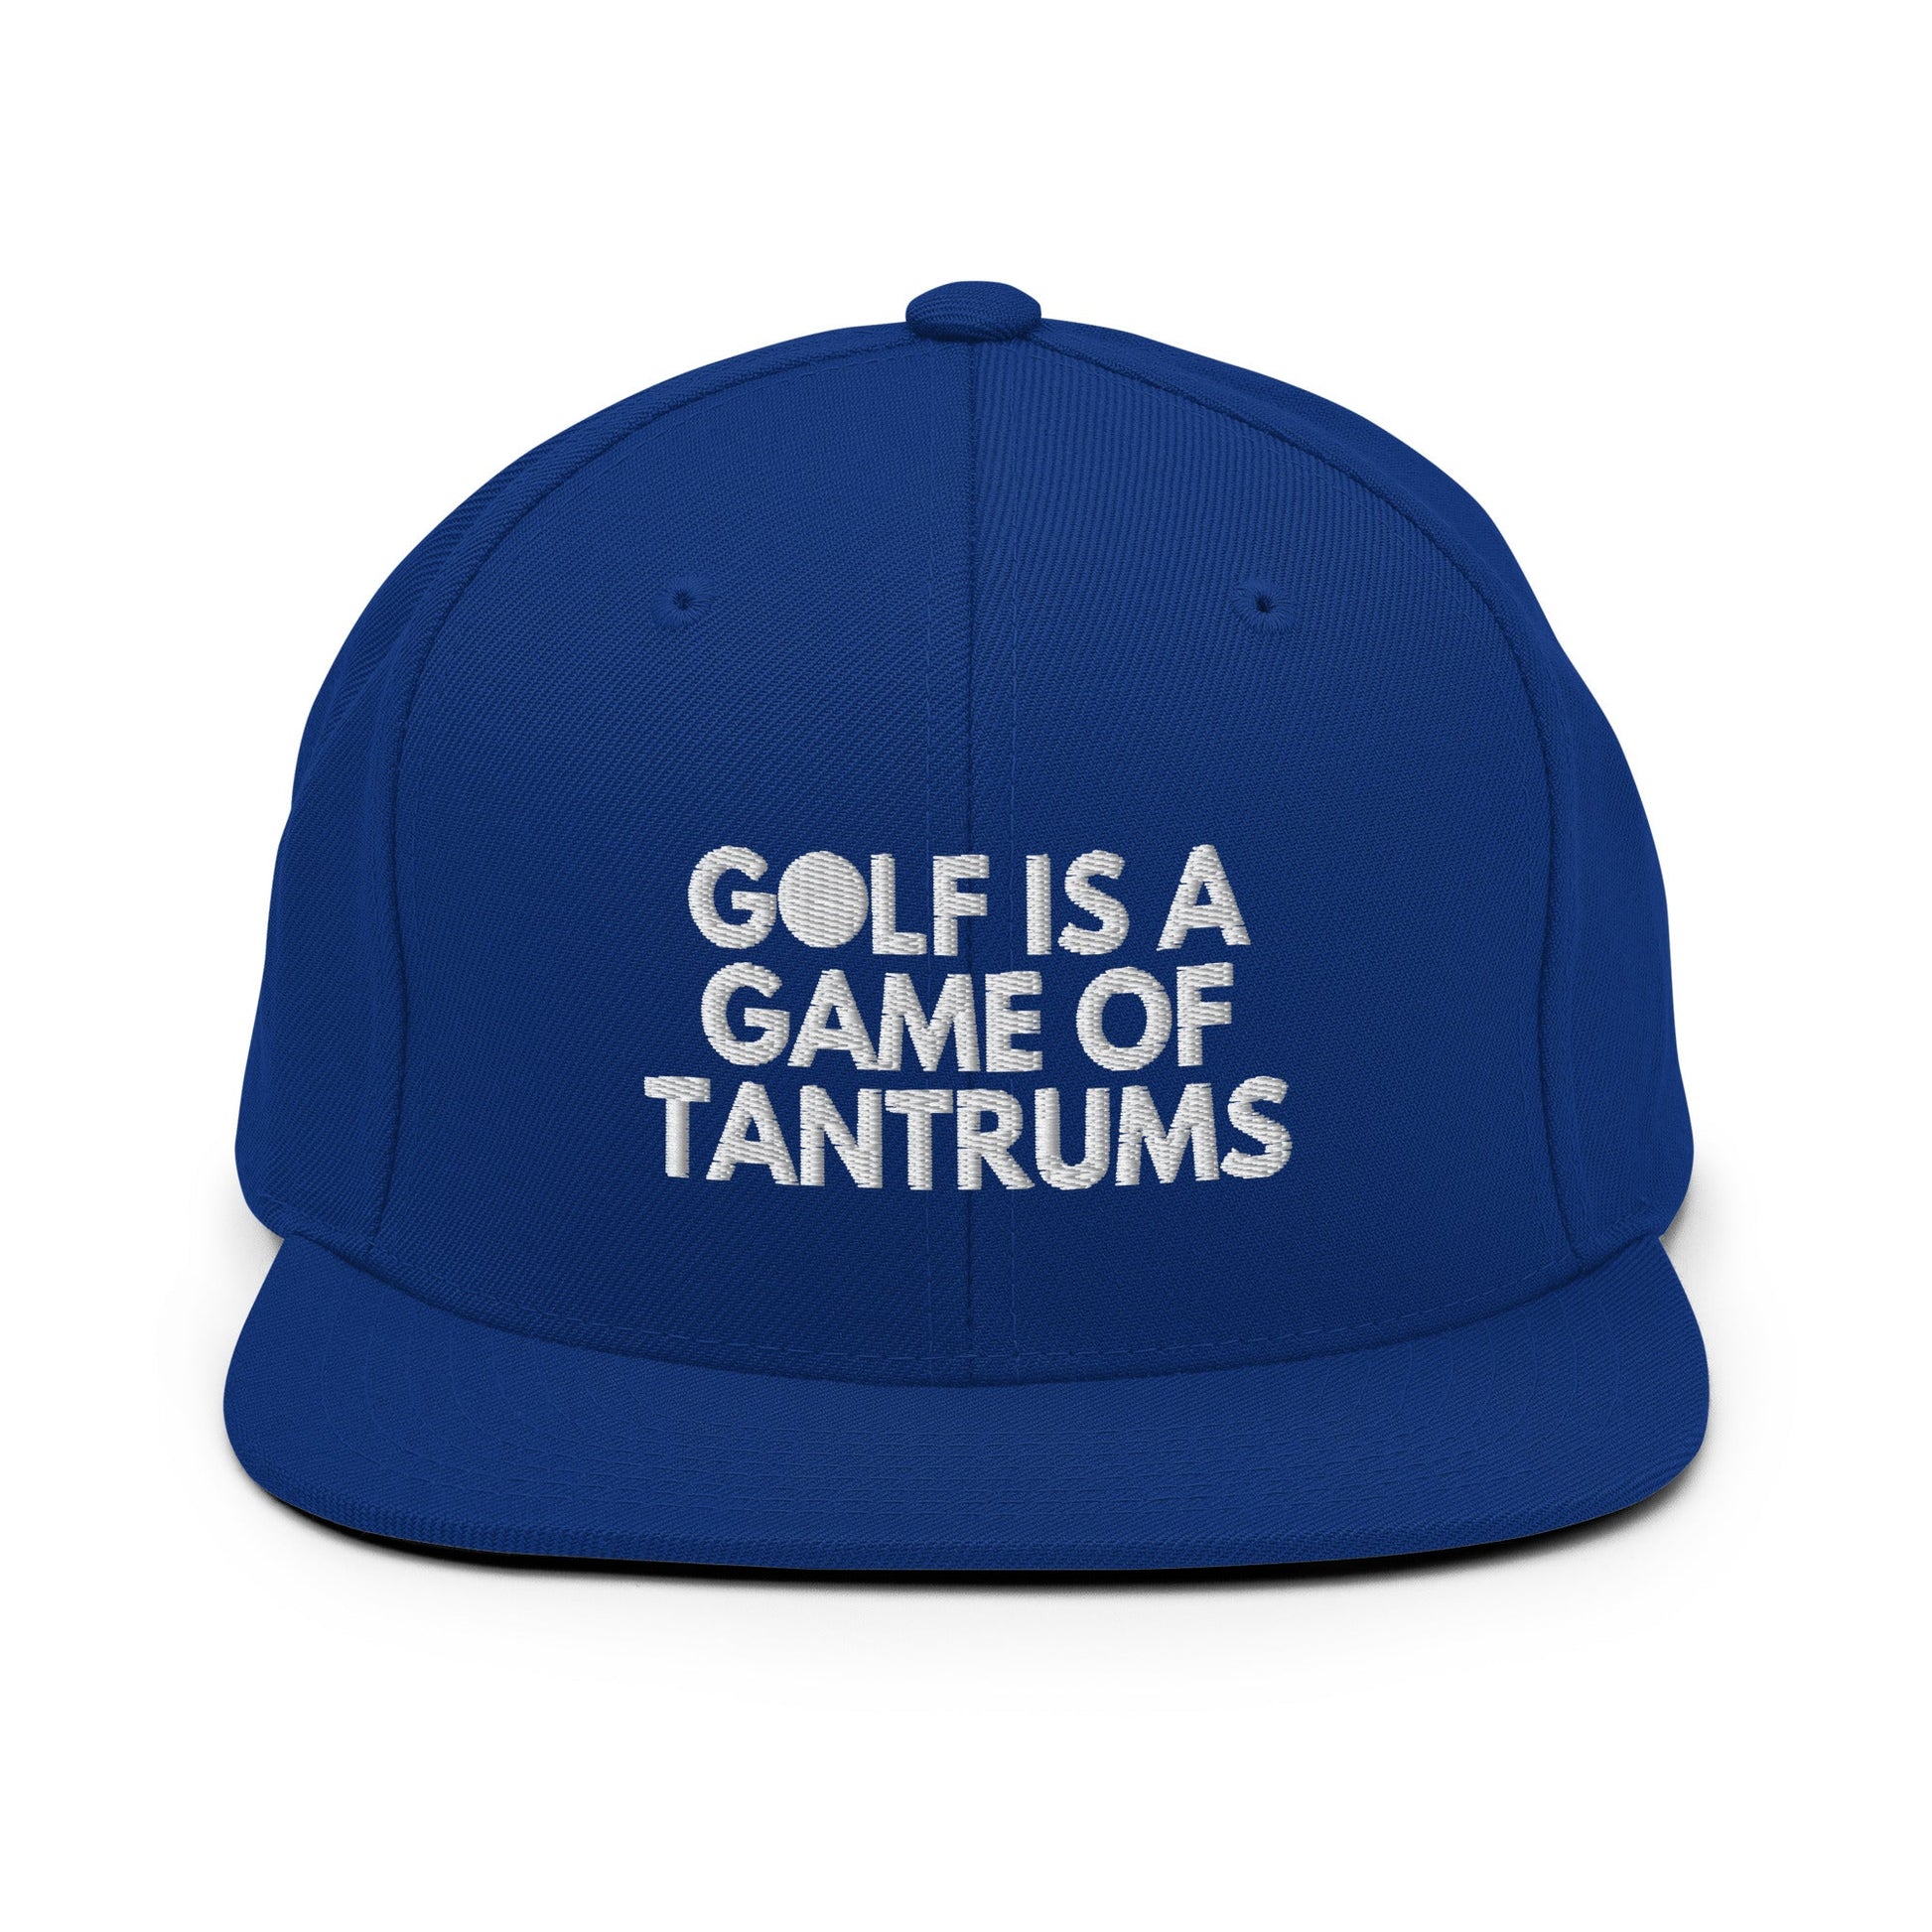 Funny Golfer Gifts  Snapback Hat Royal Blue Golf Is A Game Of Tantrums Hat Snapback Hat